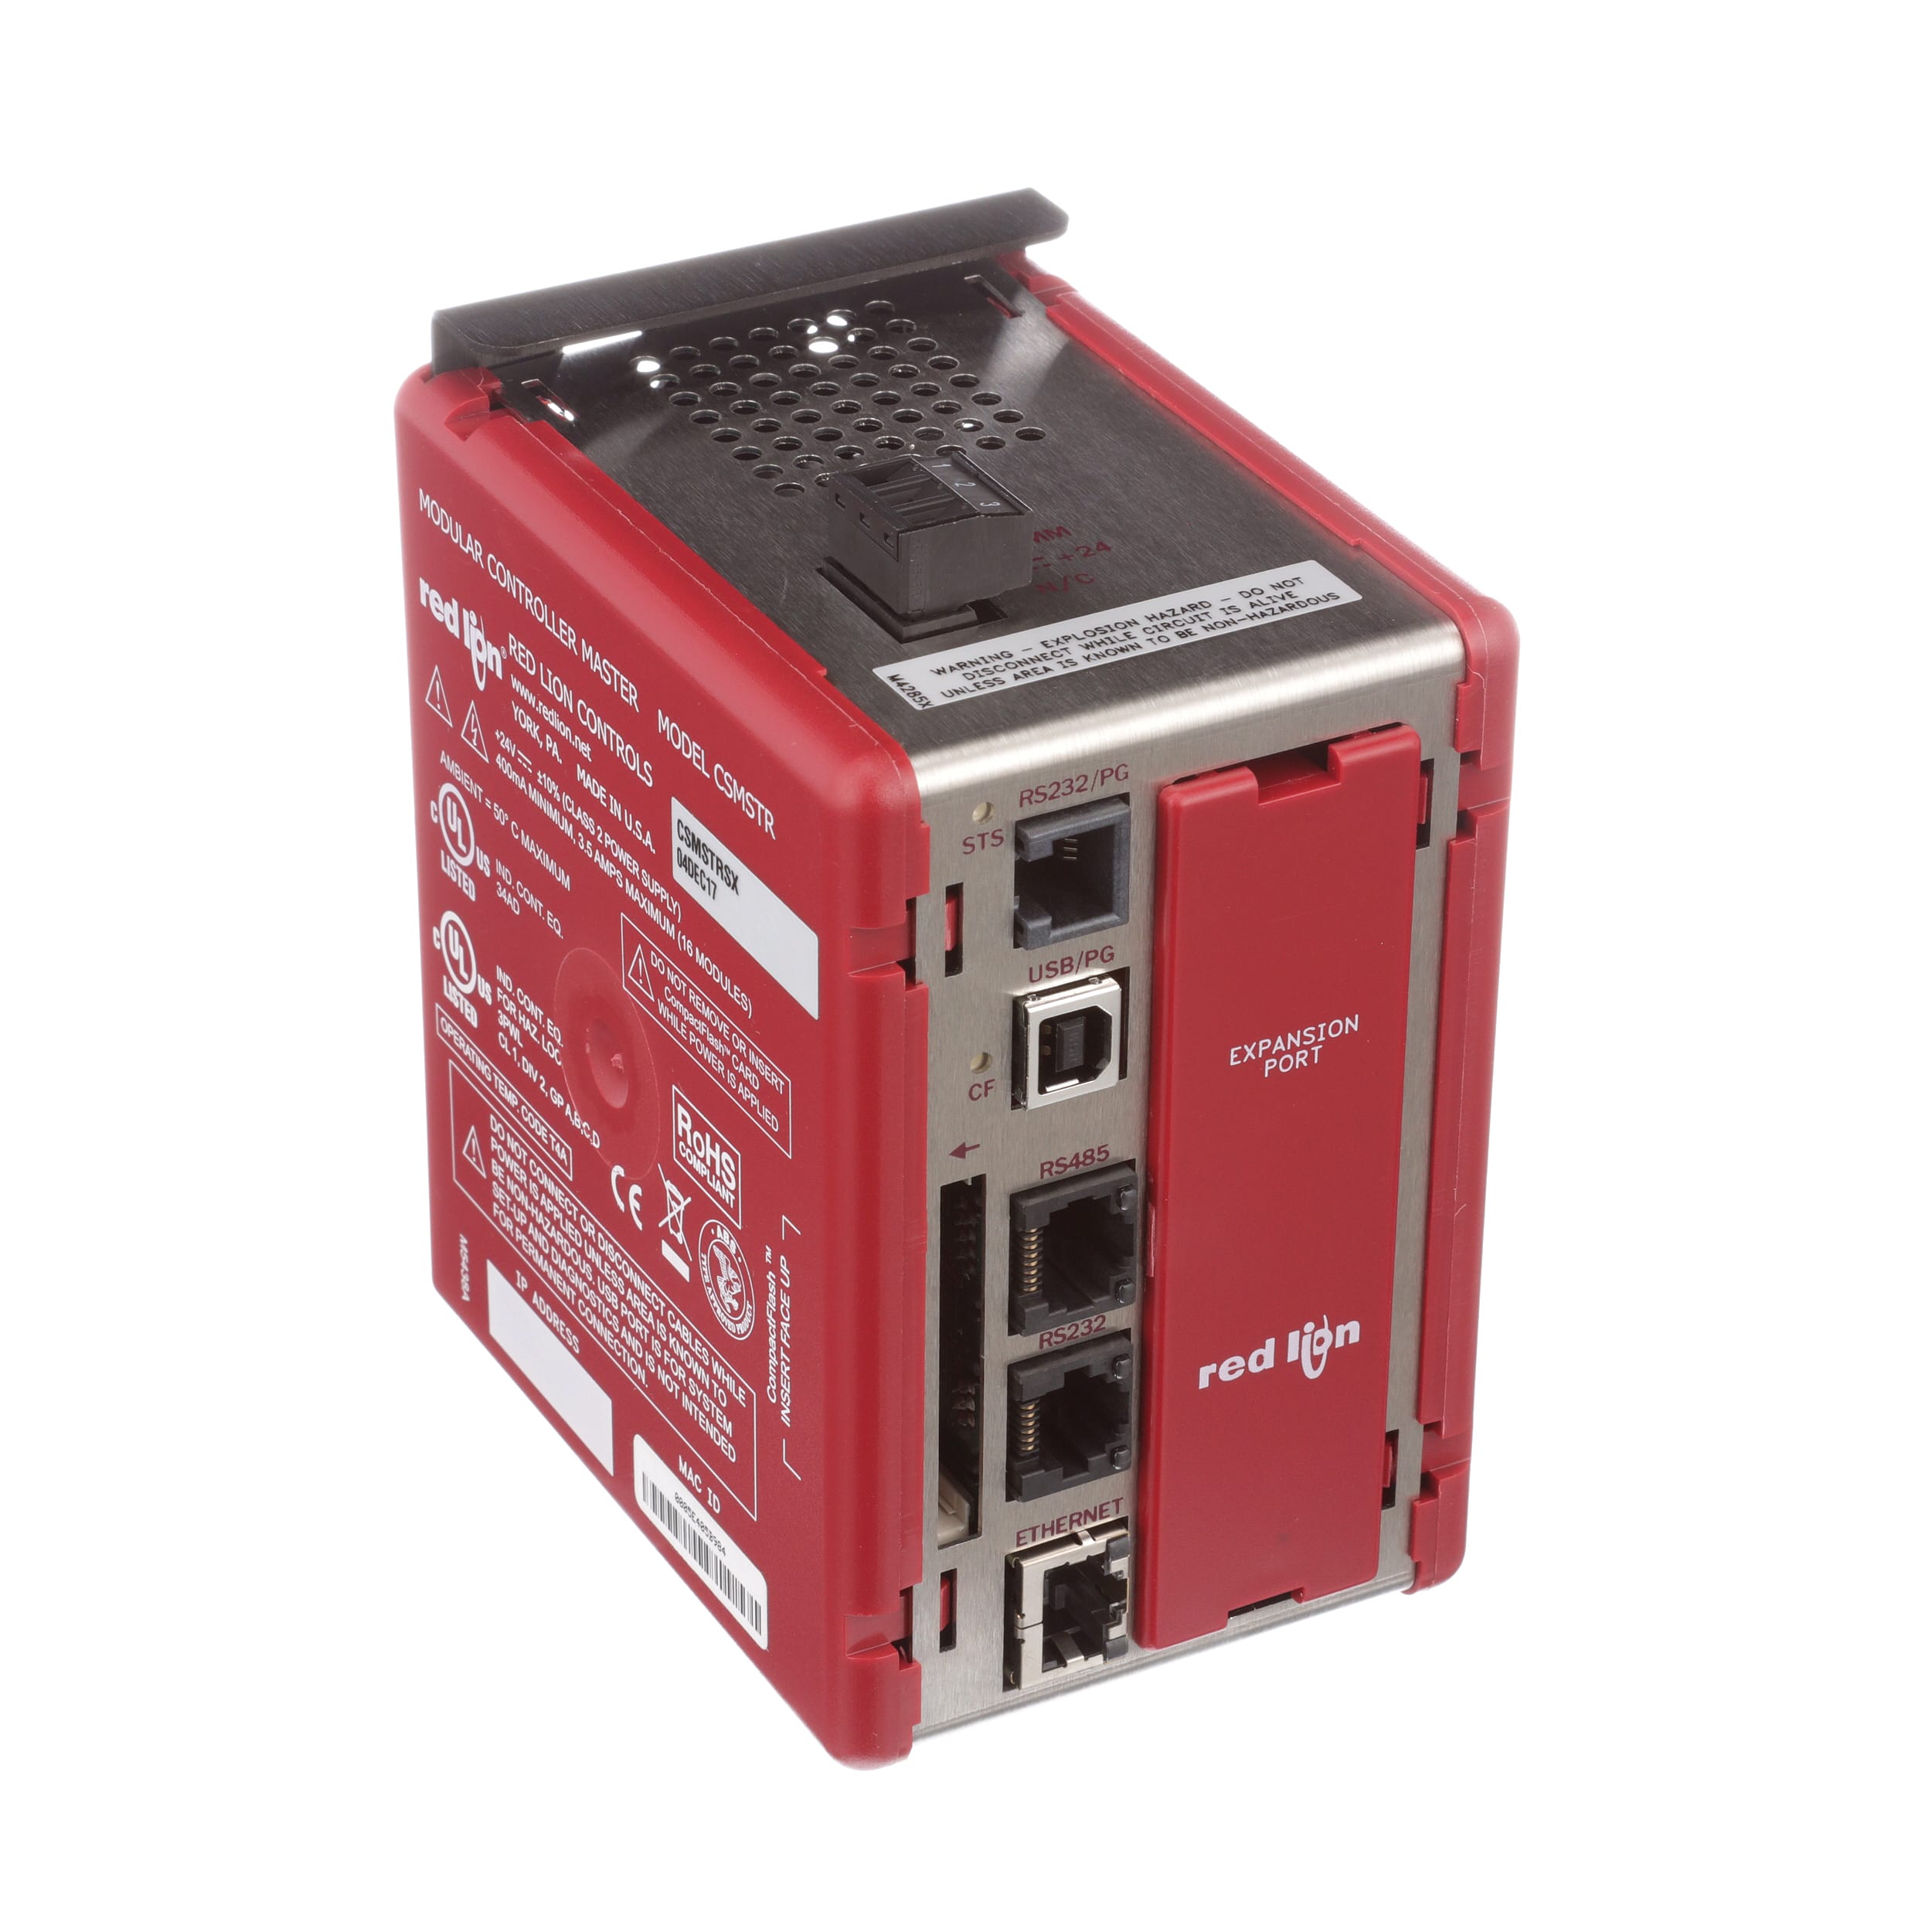 Red Lion Controls - CSMSTRSX - Web Server,Virtual HMI,QVGA,Multi 